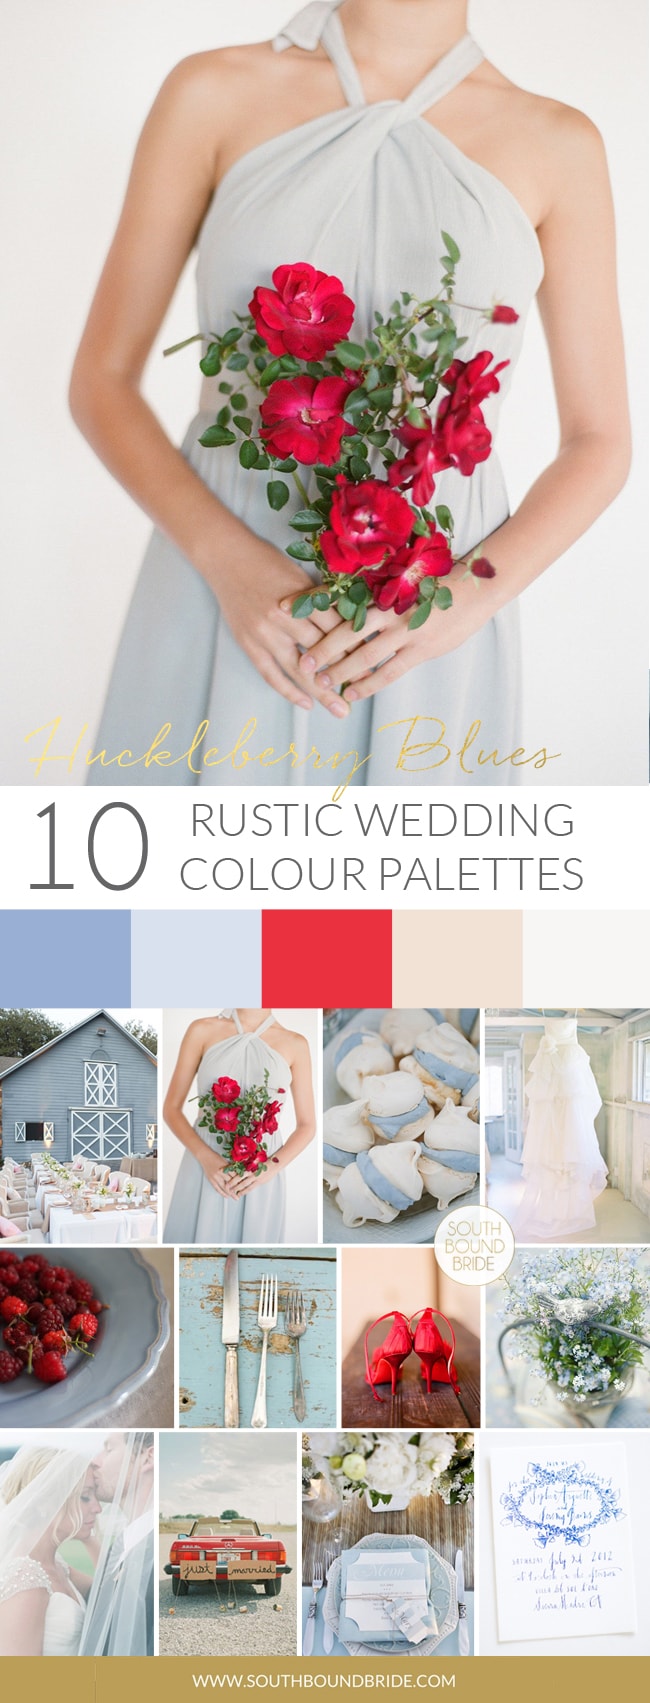 Huckleberry Blues Rustic Wedding Palette | SouthBound Bride